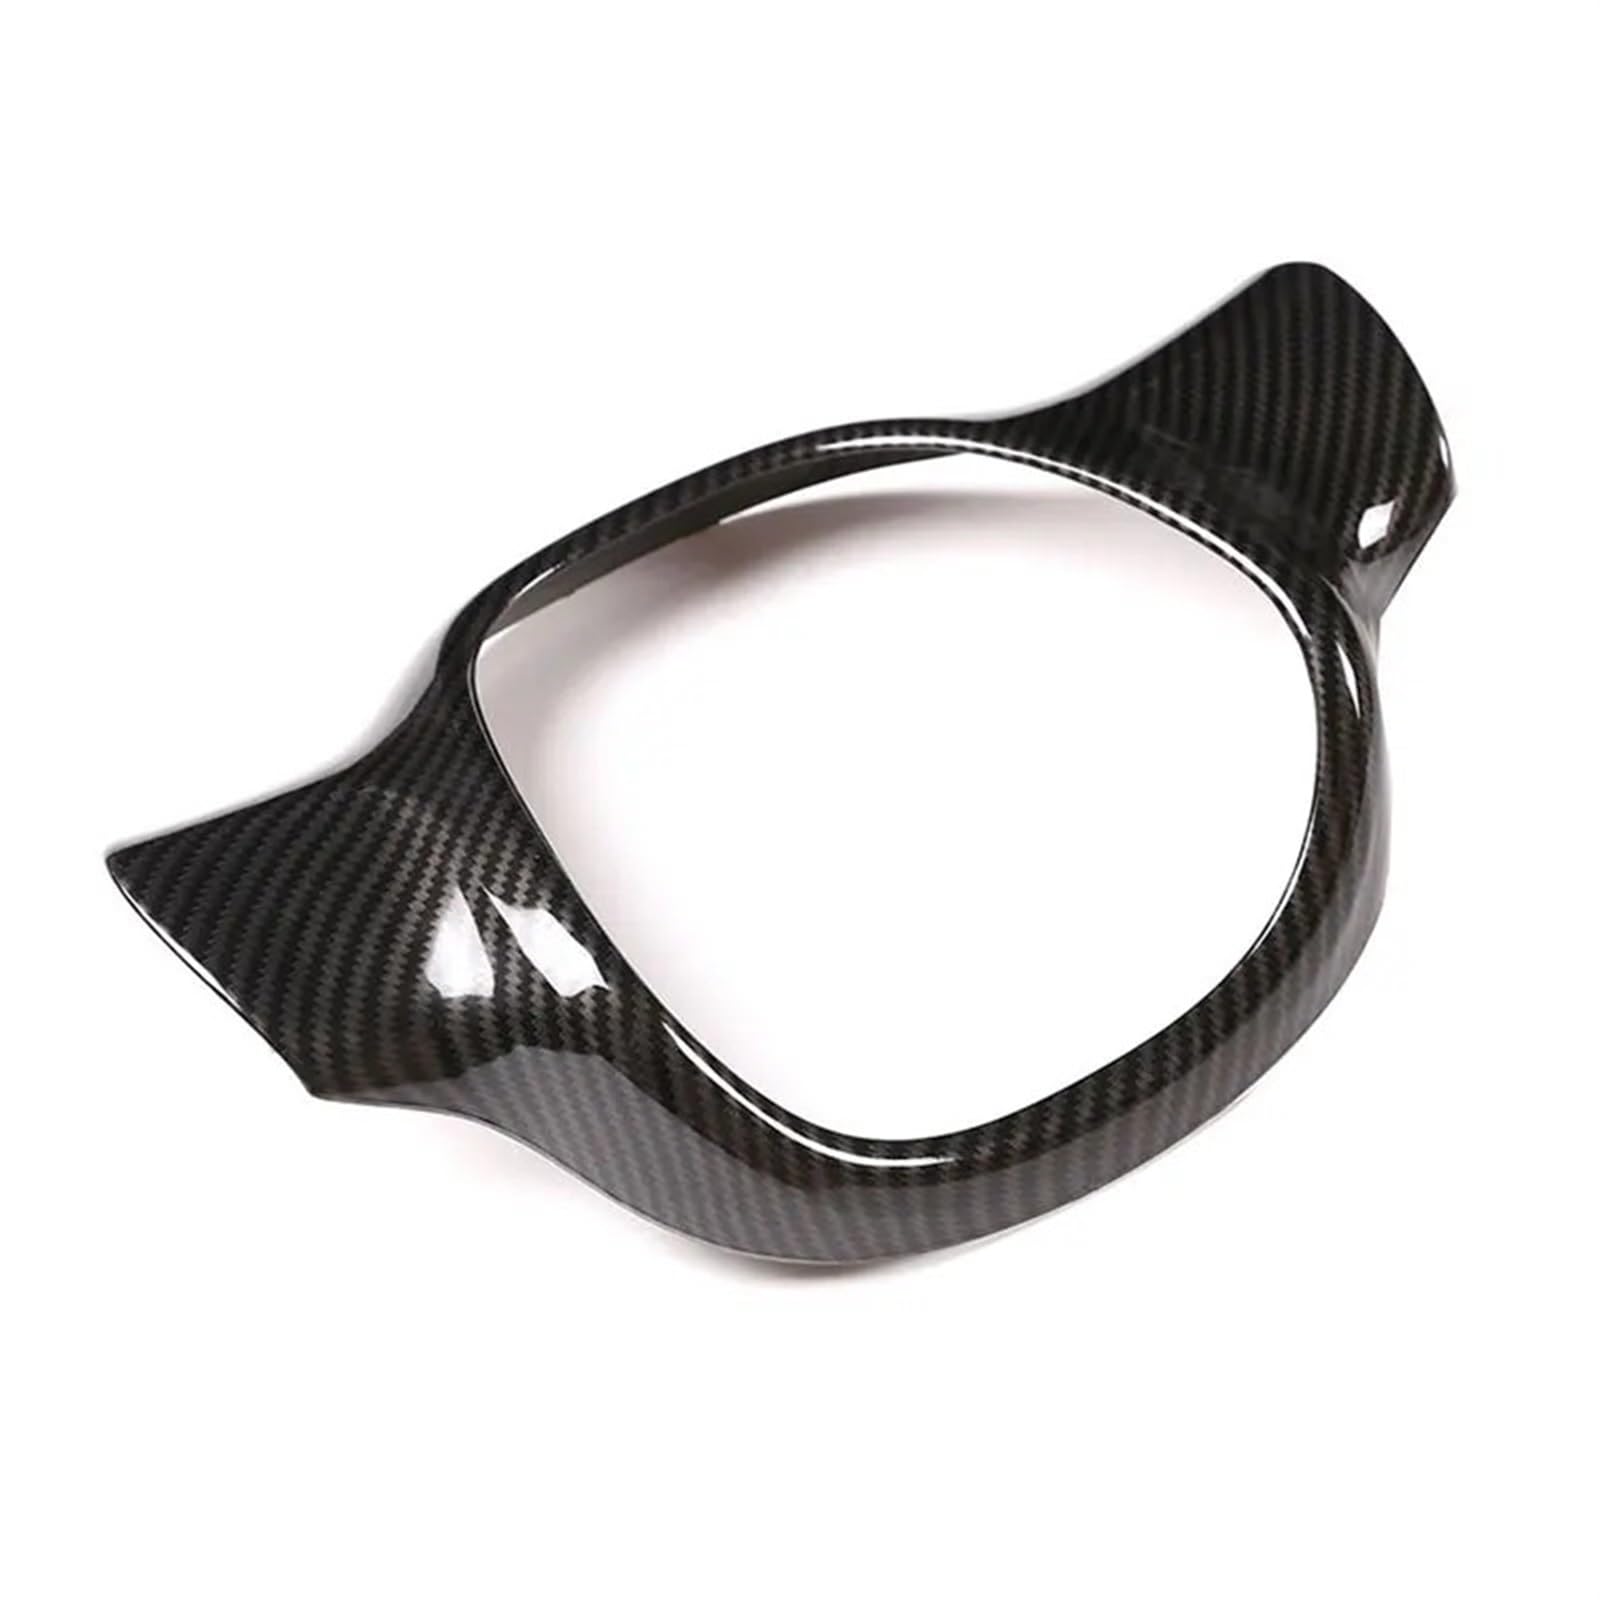 LFDTO Auto-Styling ABS Carbon Fiber Texture Lenkrad Abdeckung Rahmen Trim Abdeckung Fit for Mercedes Benz Smart 451 2009-2015 von LFDTO